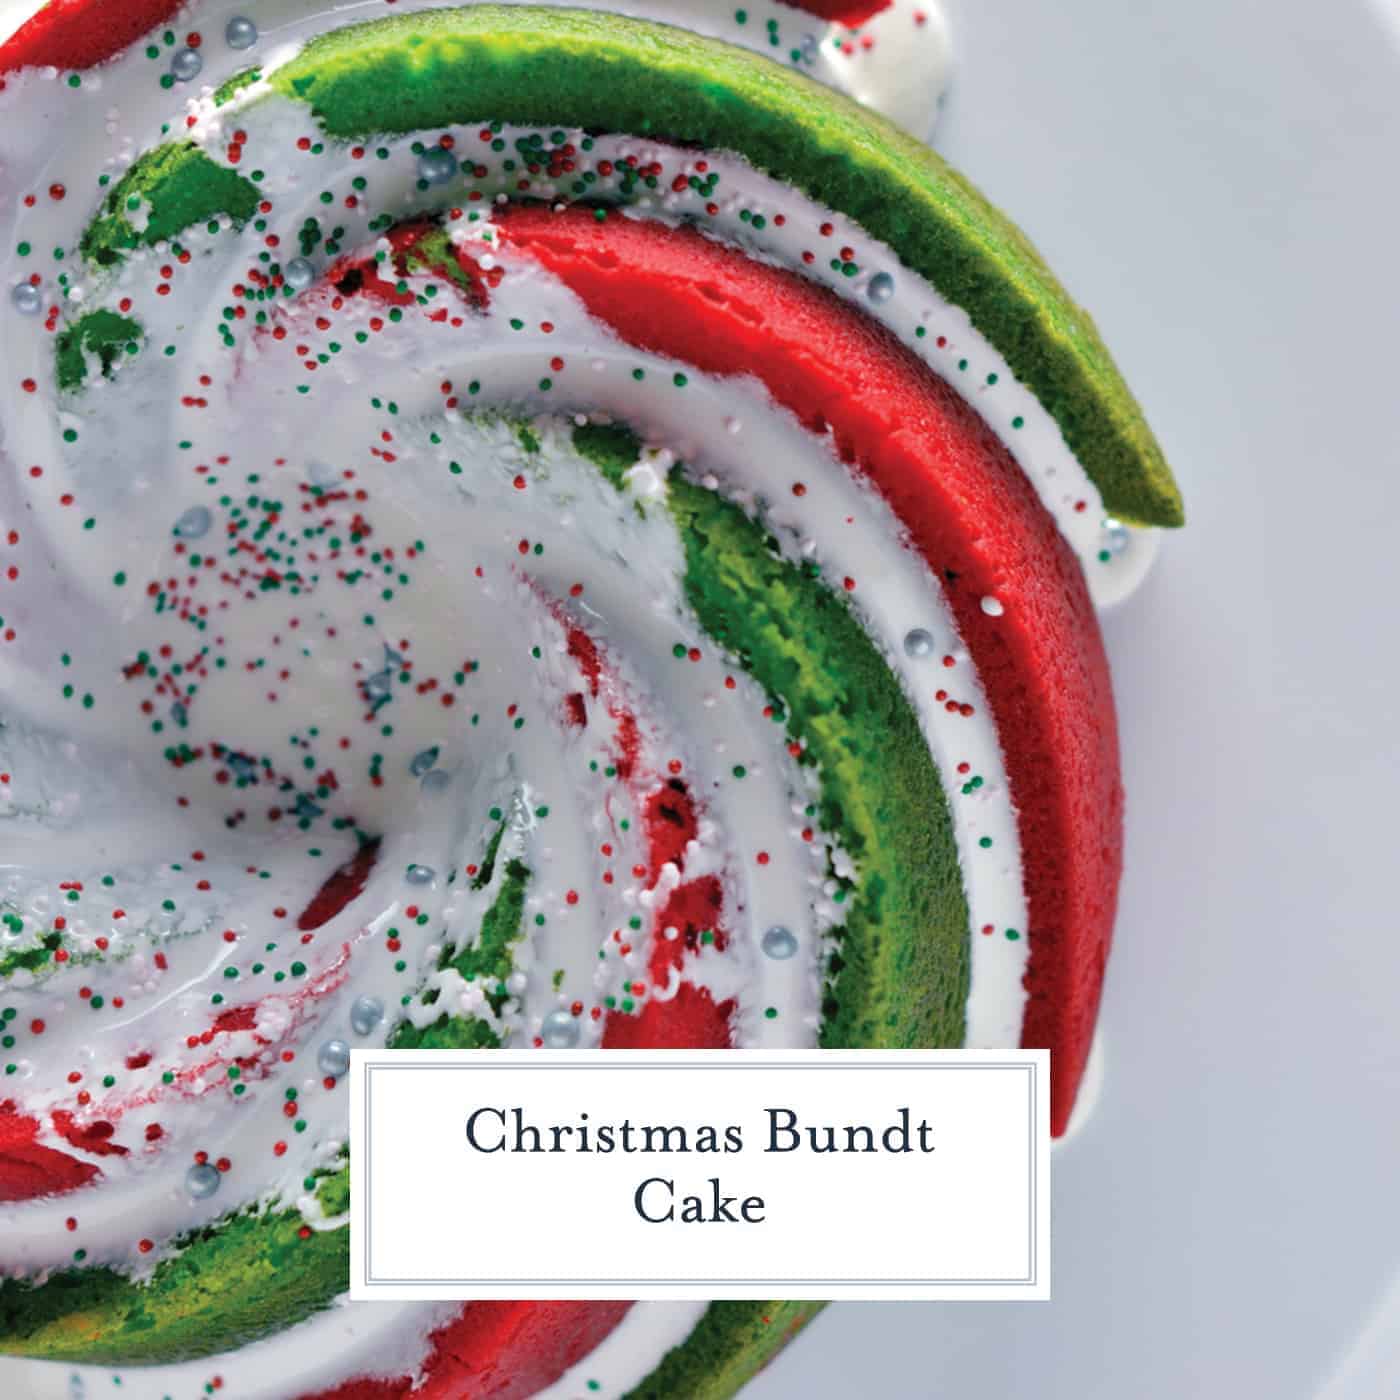 https://www.savoryexperiments.com/wp-content/uploads/2015/12/Christmas-Bundt-Cake-FB.jpg